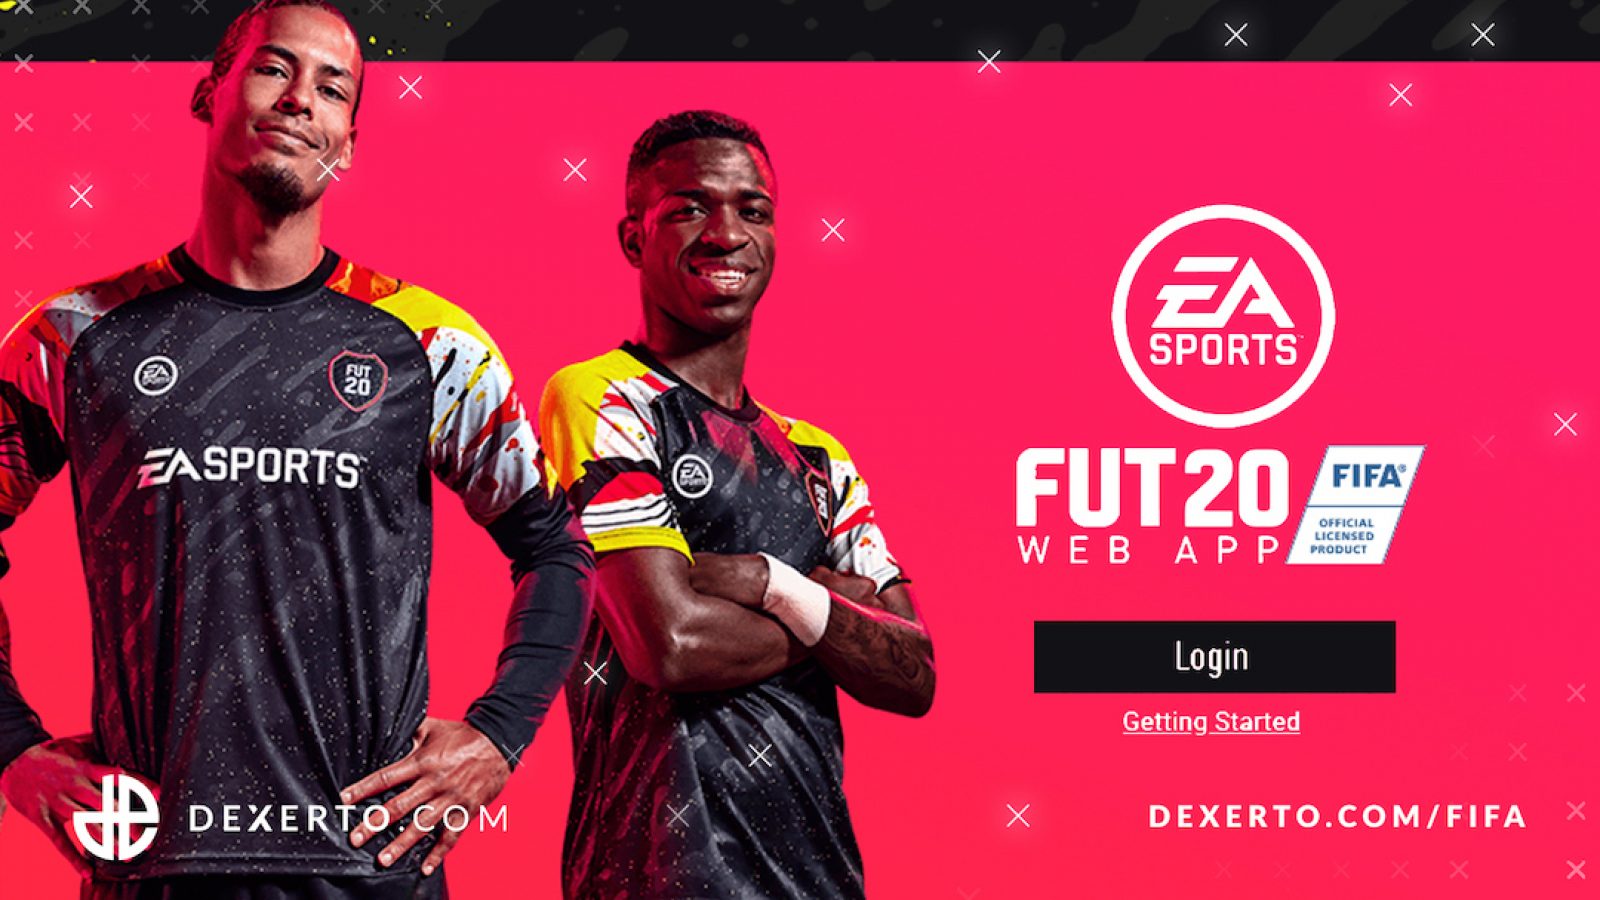 FIFA 20 Web App Release Date and FUT Webstart Details